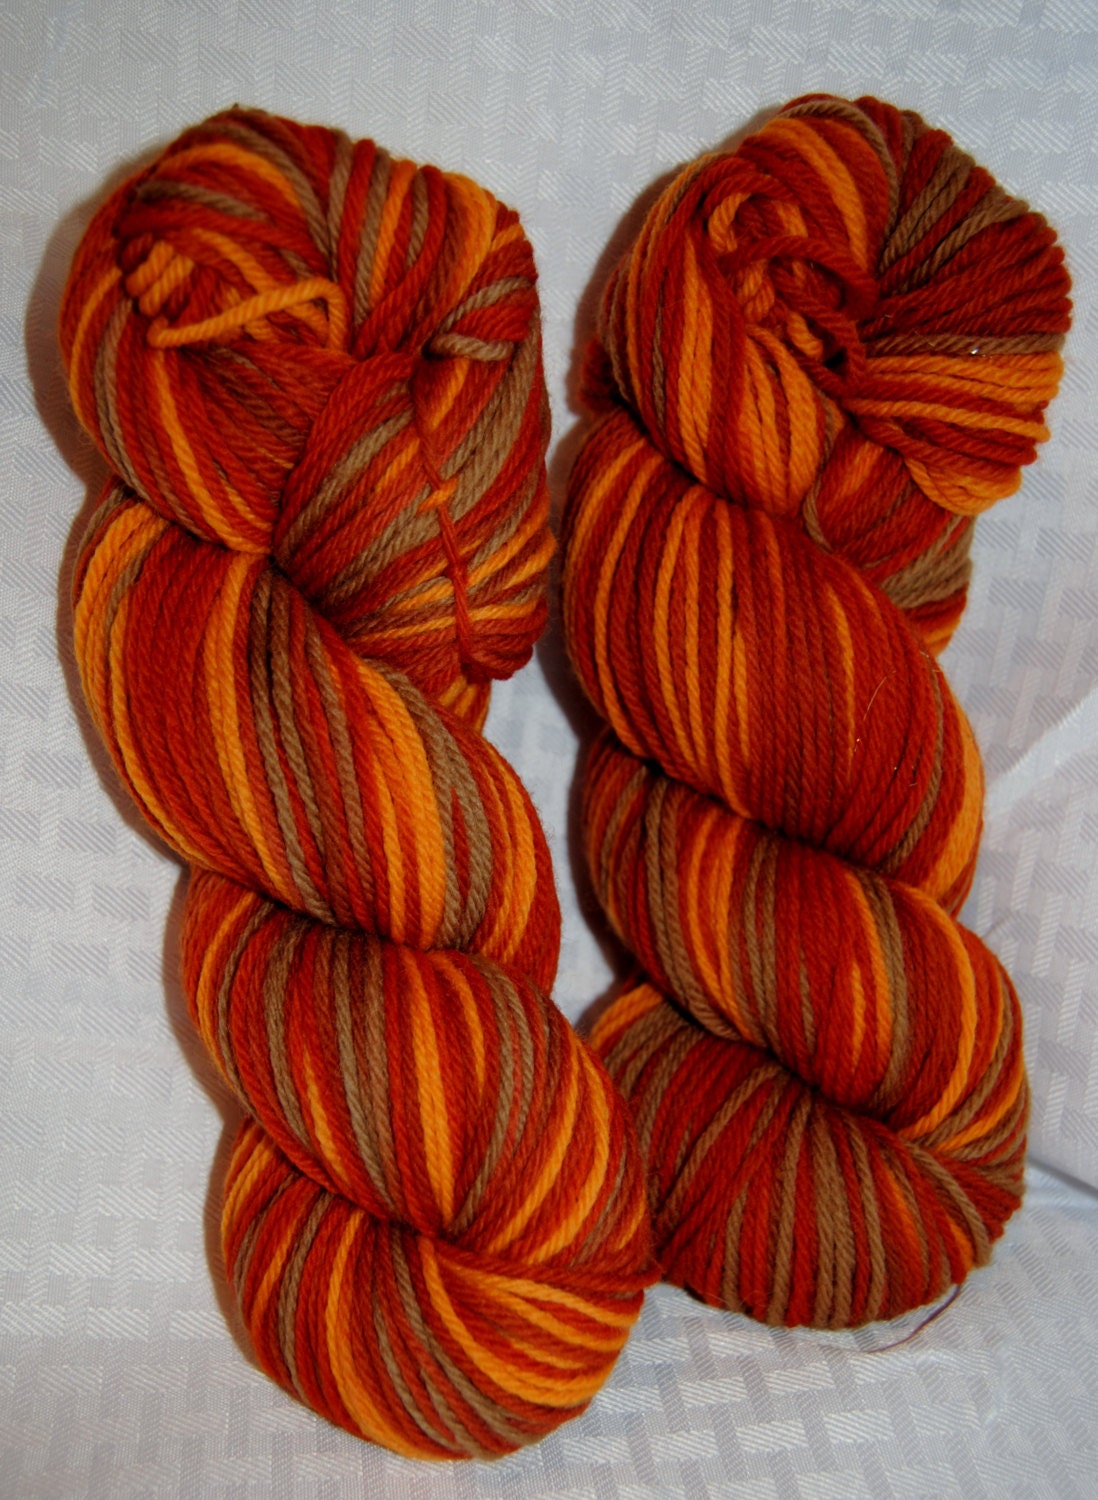 Cascade 220 yarn in beautiful falls colors. 100% wool hand